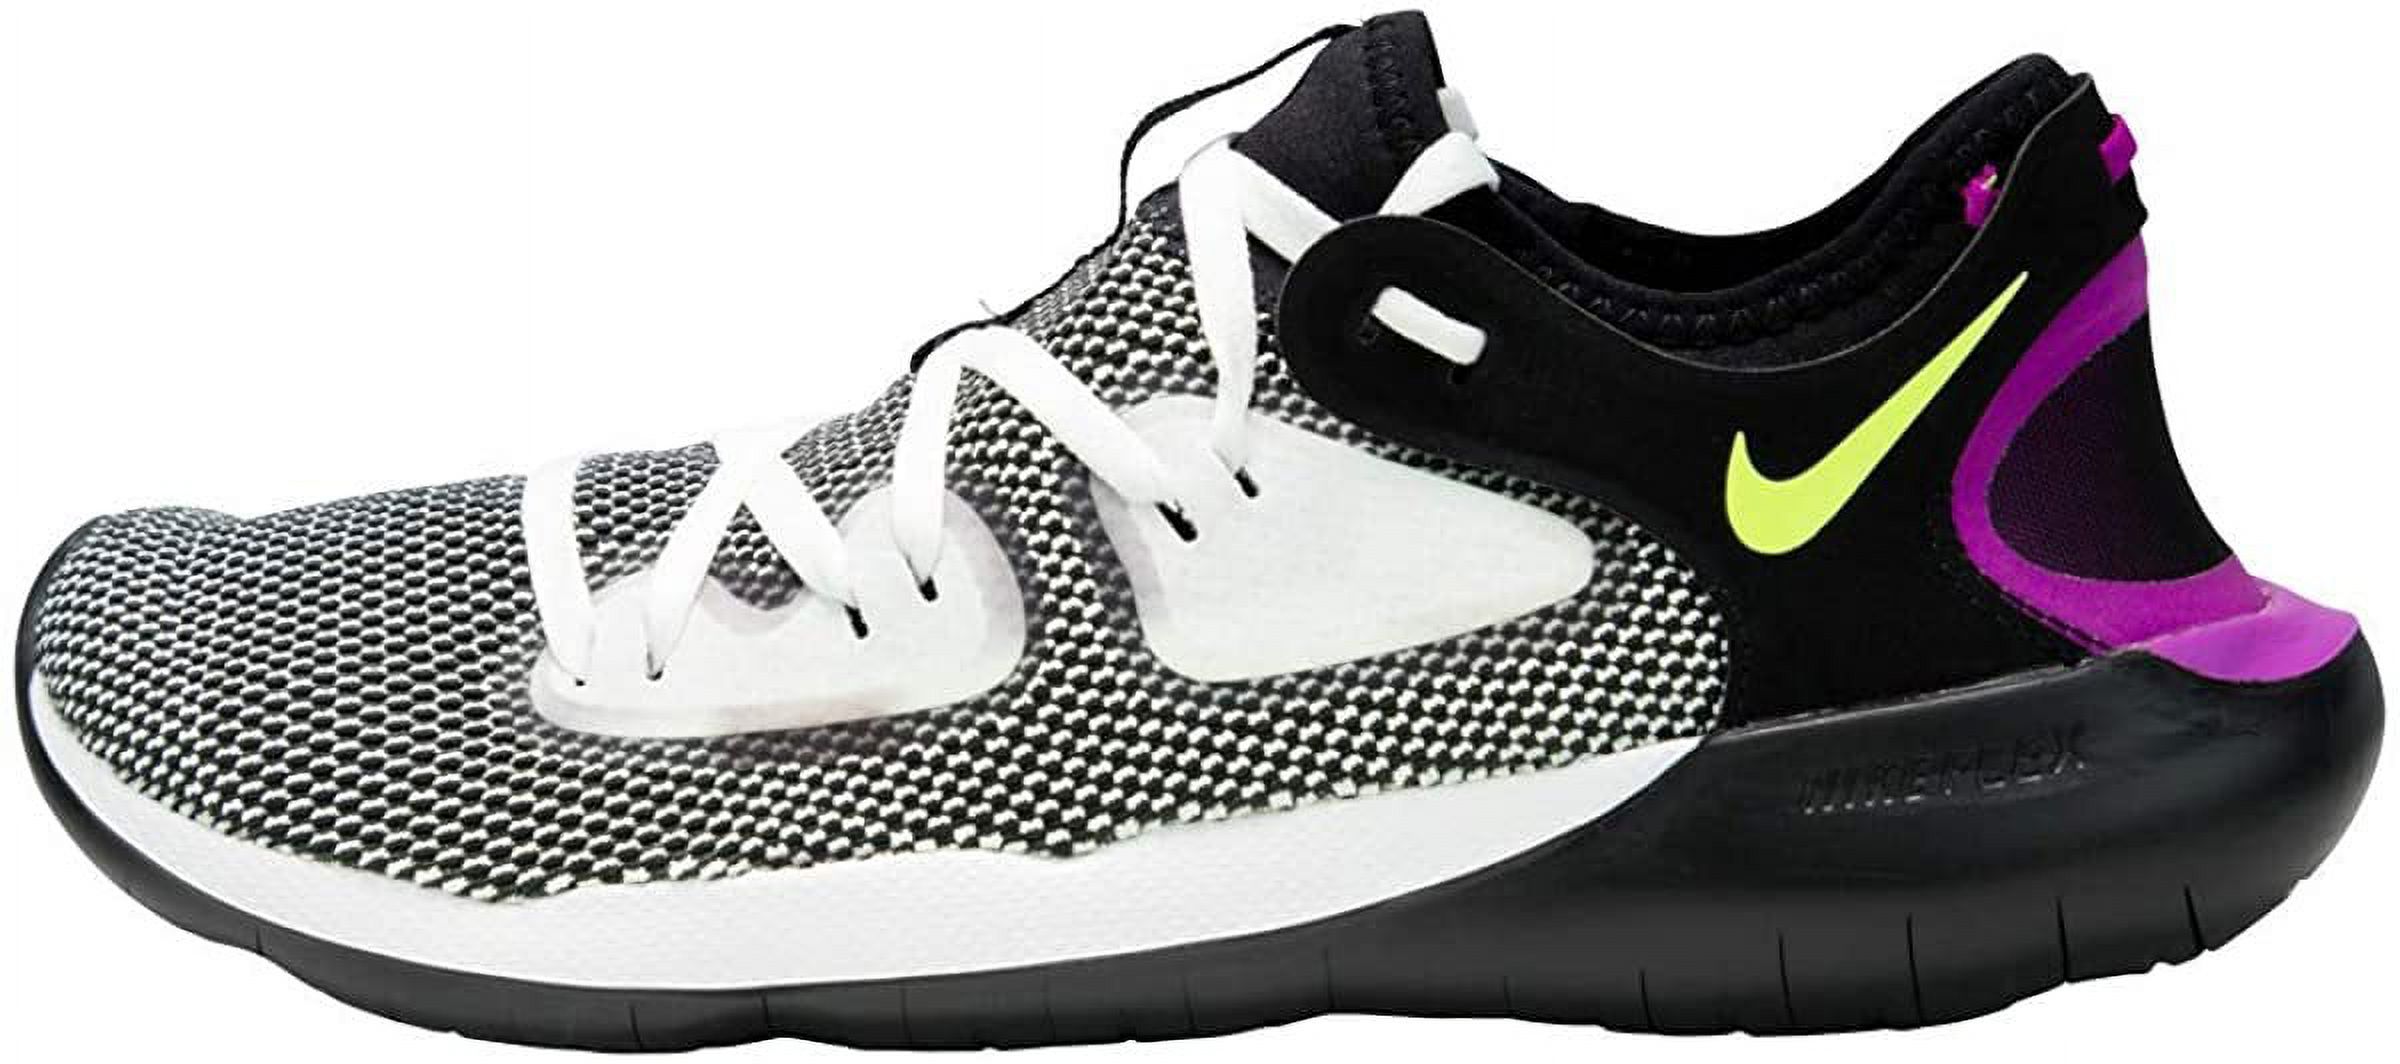 Nike Men's Flex RN 2019 Running Shoes - image 3 of 7